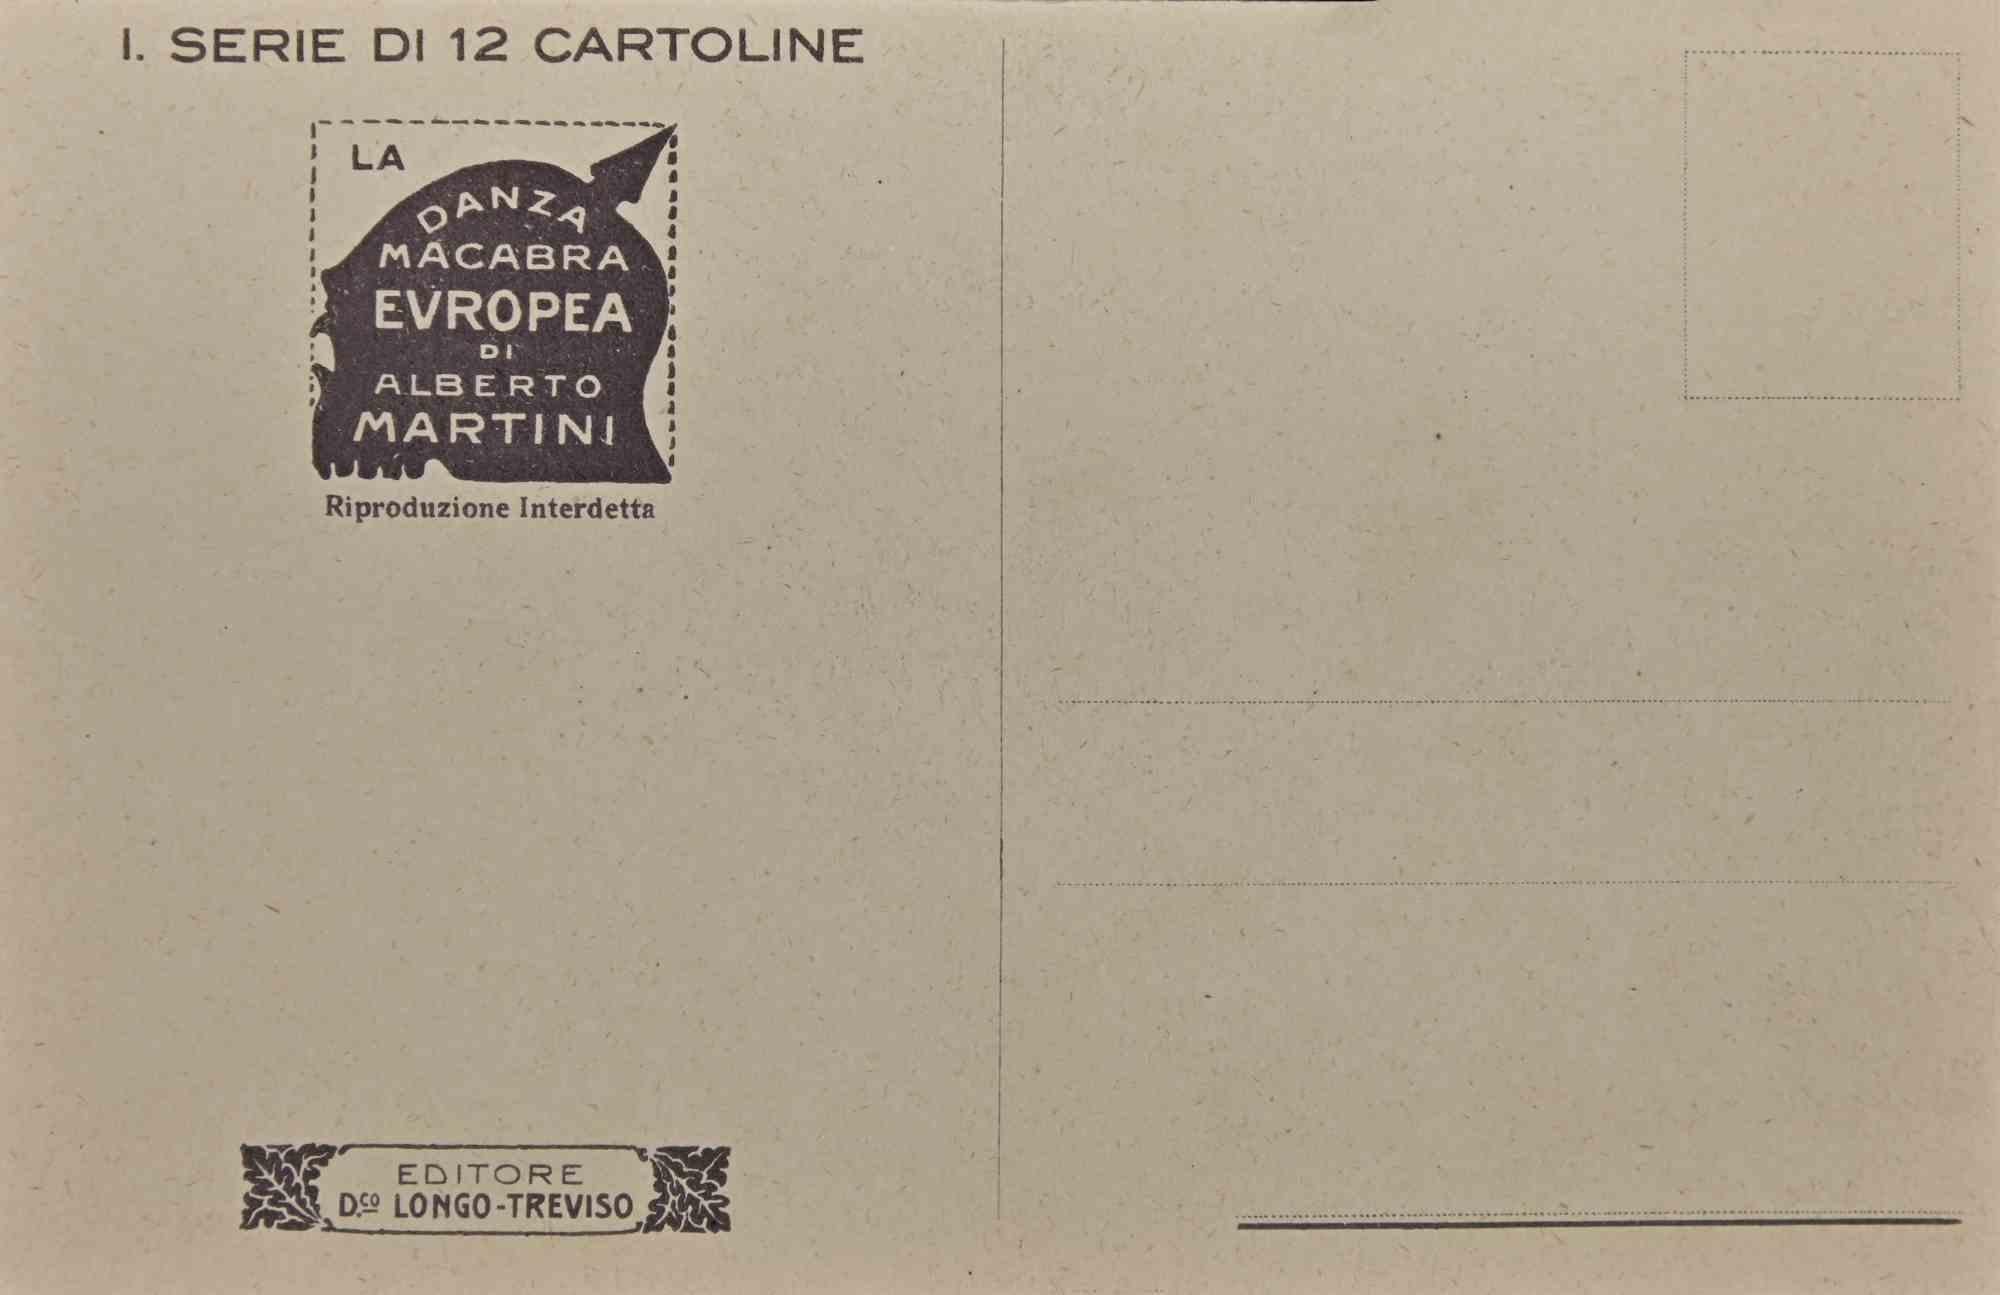 The European Macabre Dance N.12 - Lithograph by A. Martini - 1915 - Print by Alberto Martini